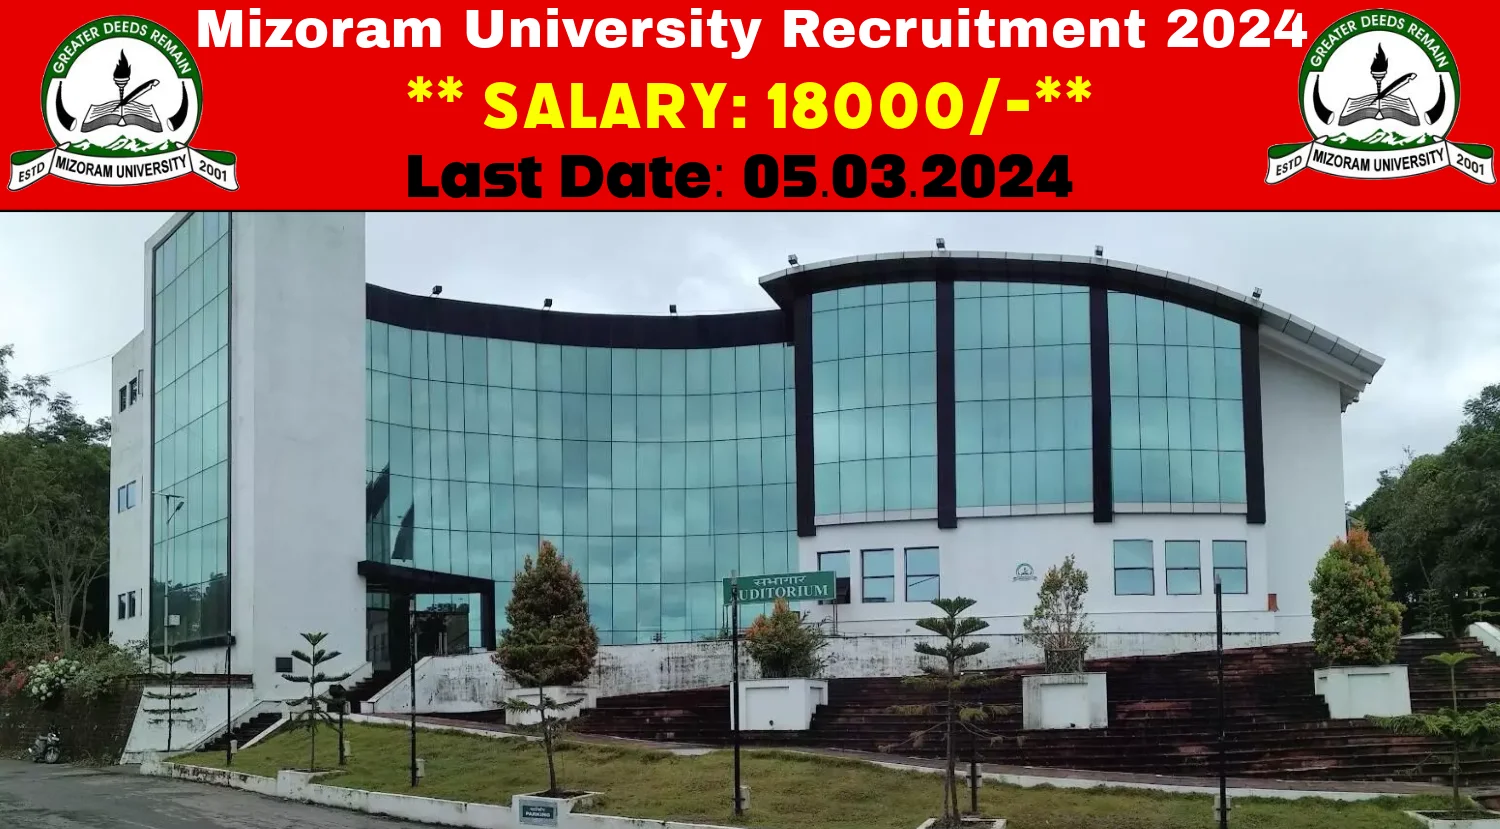 Mizoram University Recruitment 2024